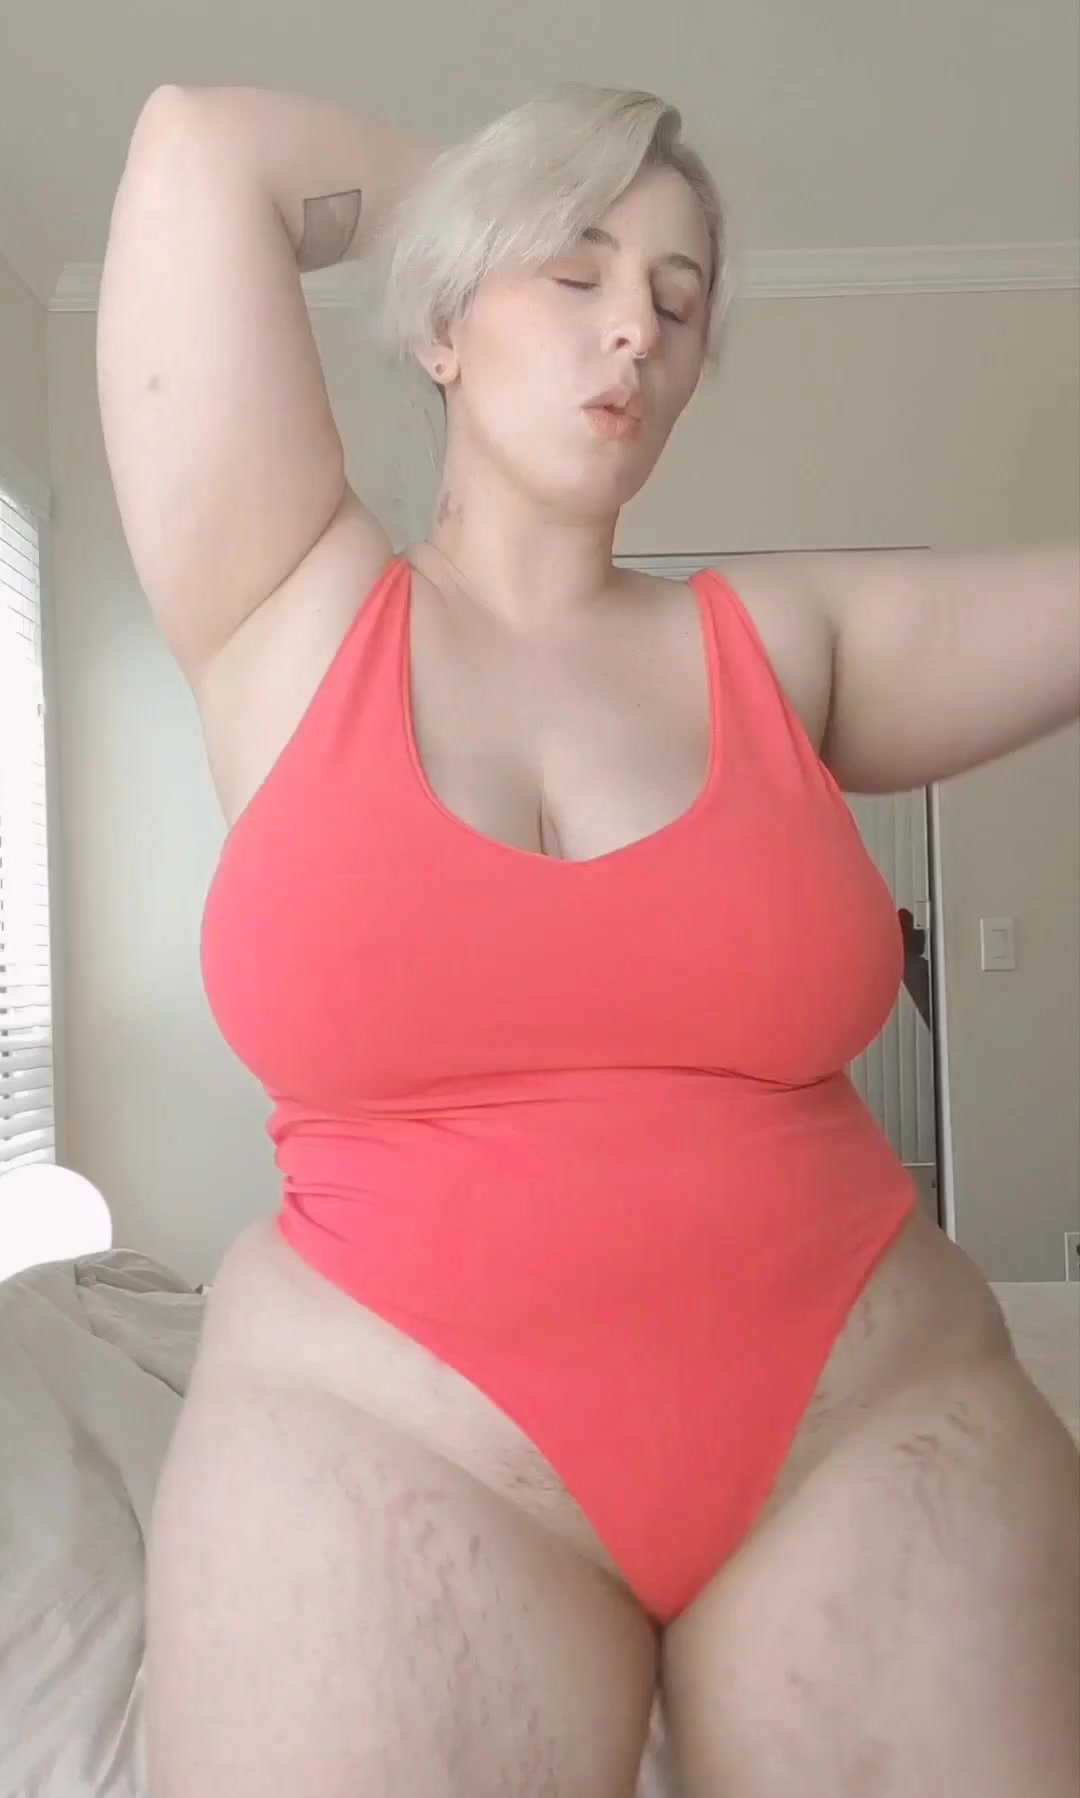 Chubby Bbw Sluts - Bbw ssbbw: Sexy chubby slut - video 2 - ThisVid.com